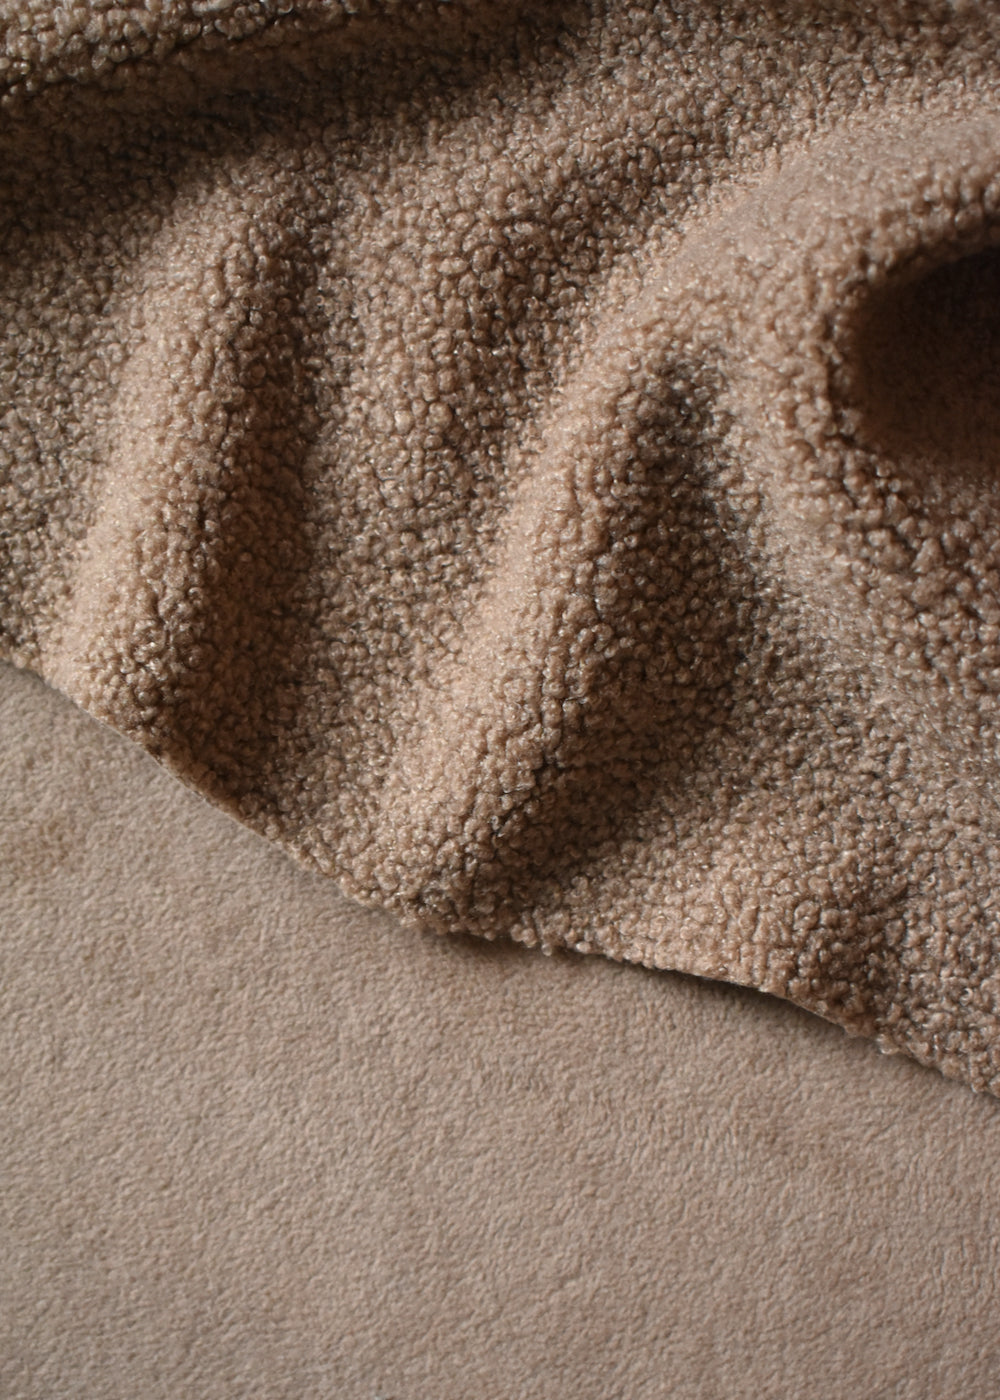 Solid Golden Brown Sherpa Fleece Fabric